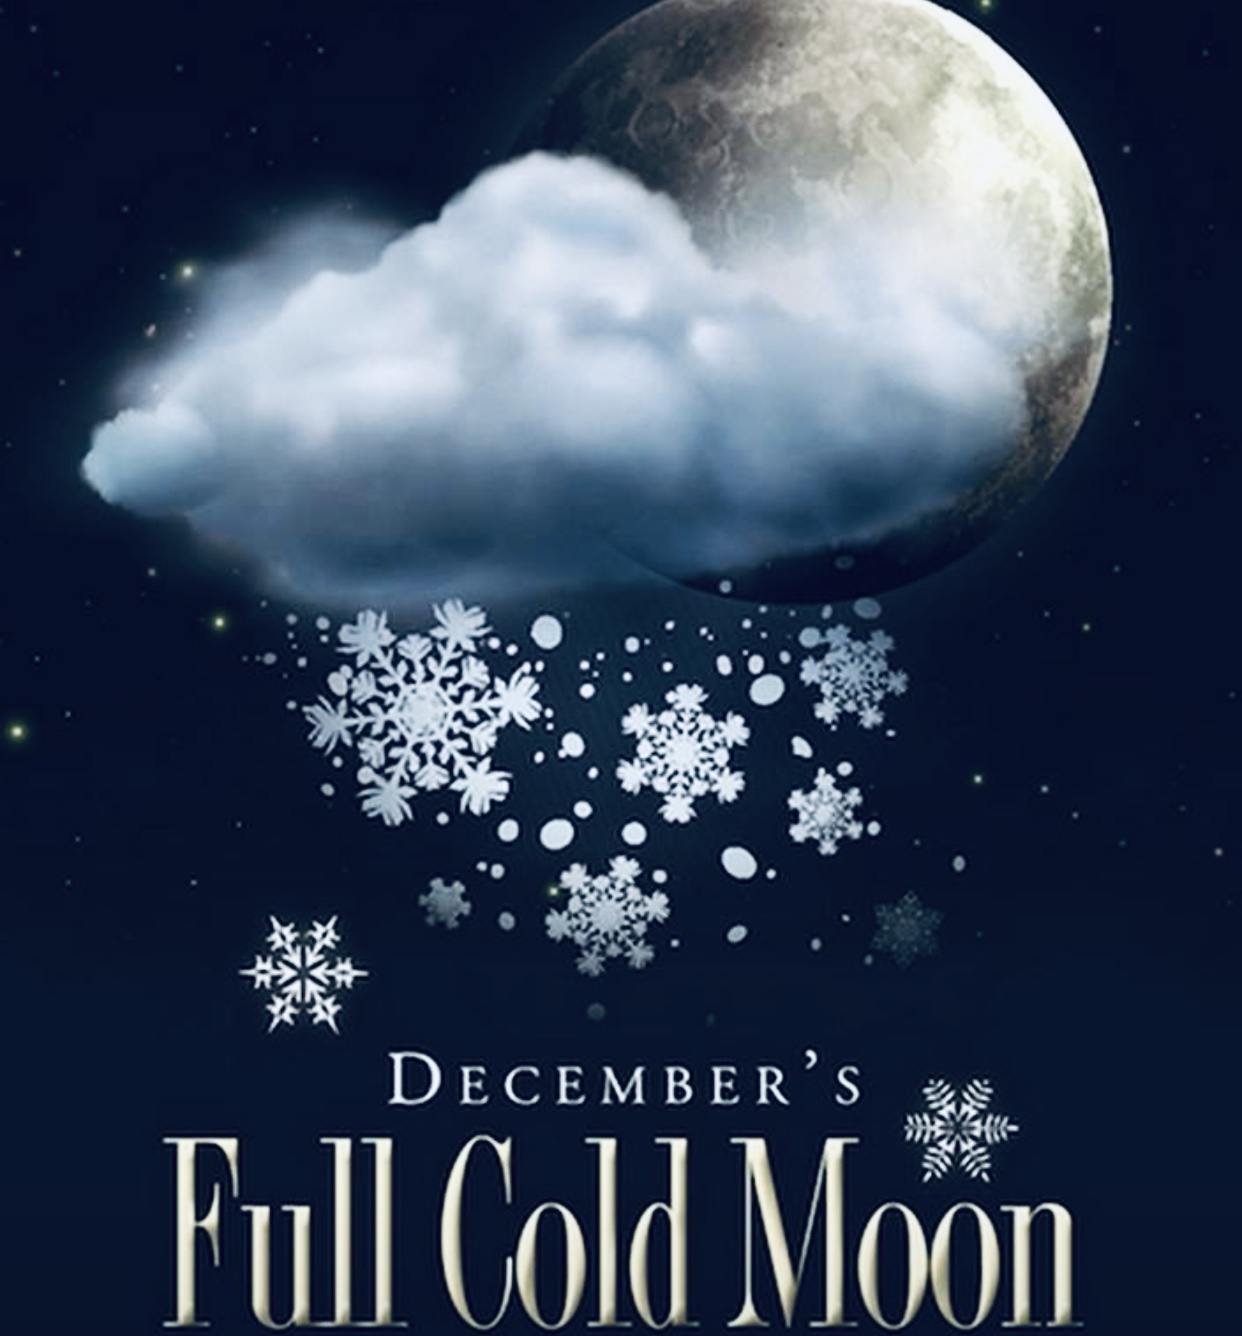 Cold Moon. December Moon. Cold Moon группа. The Moon on December.